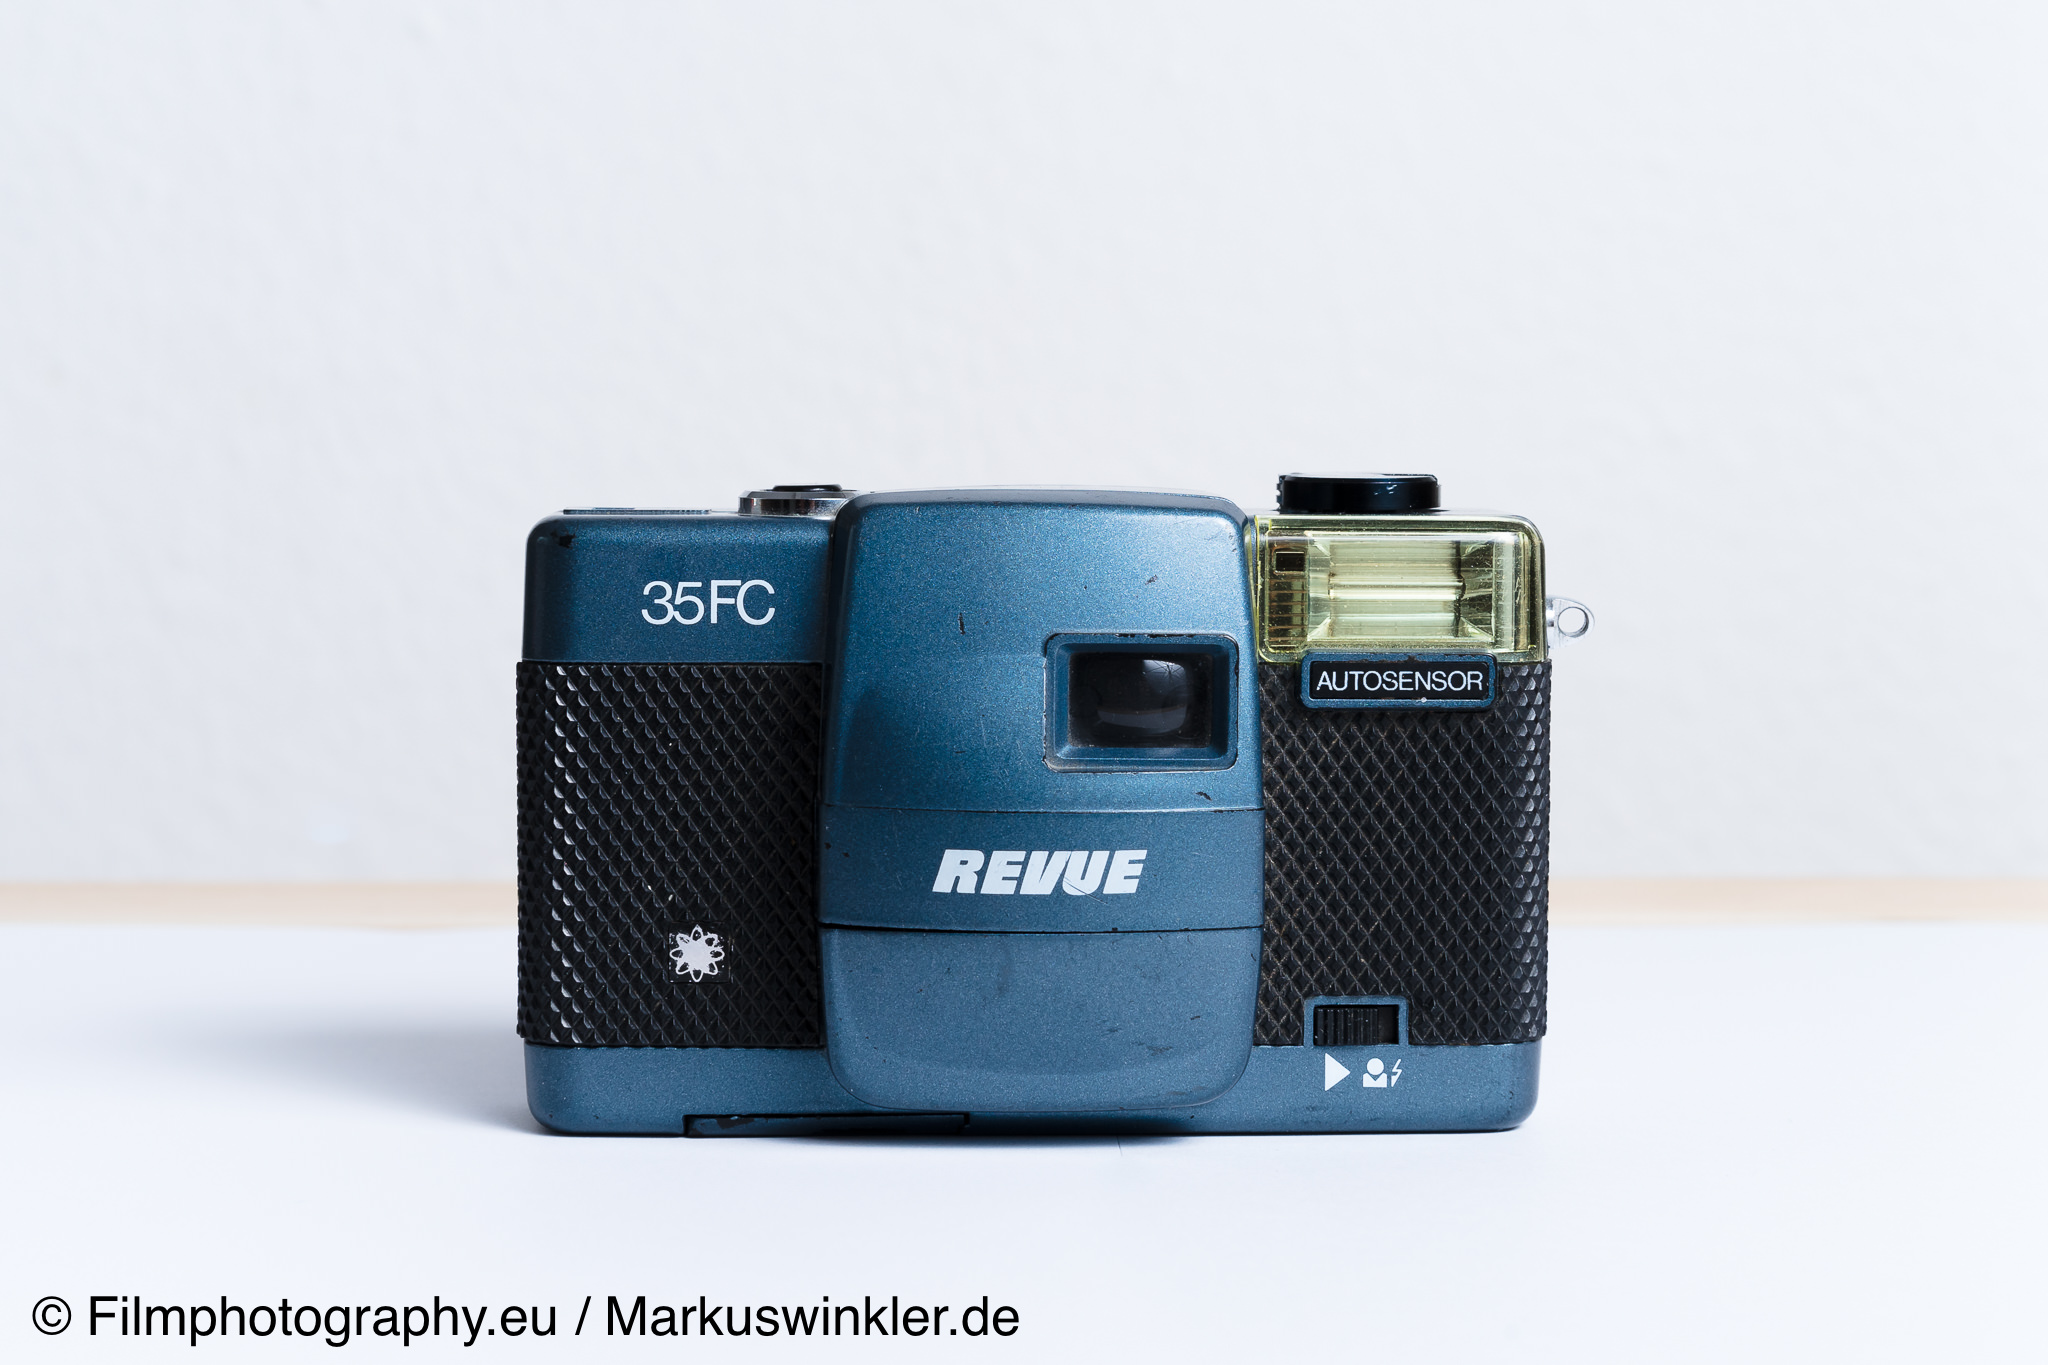 revue-35fc-fotokamera